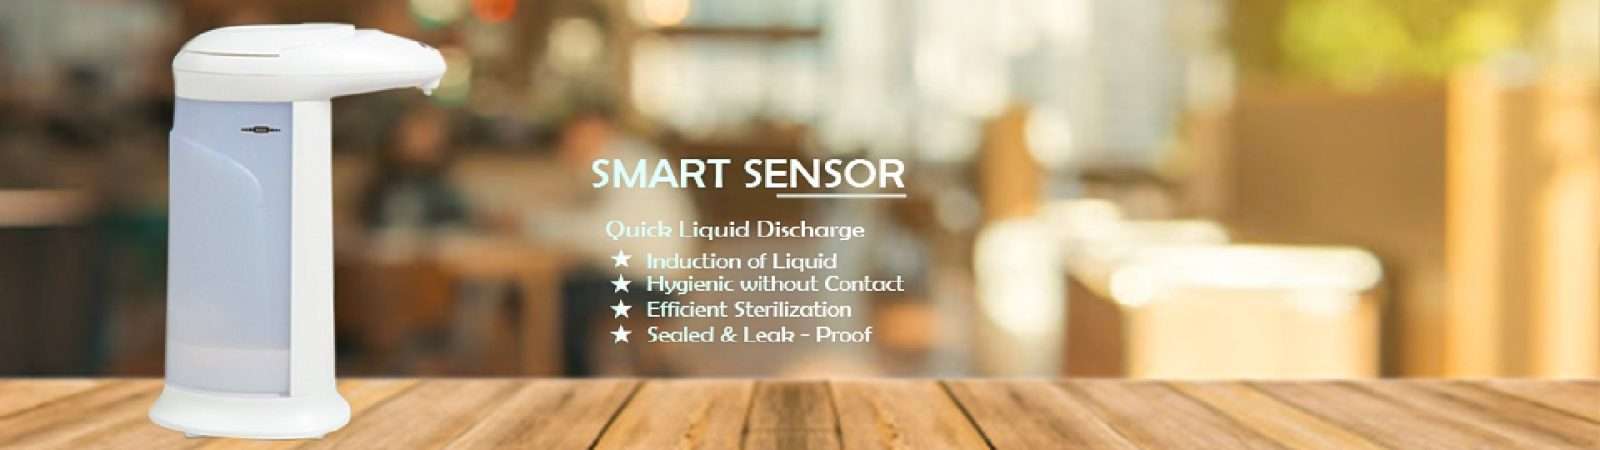 automatic soap dispenser smart sensor